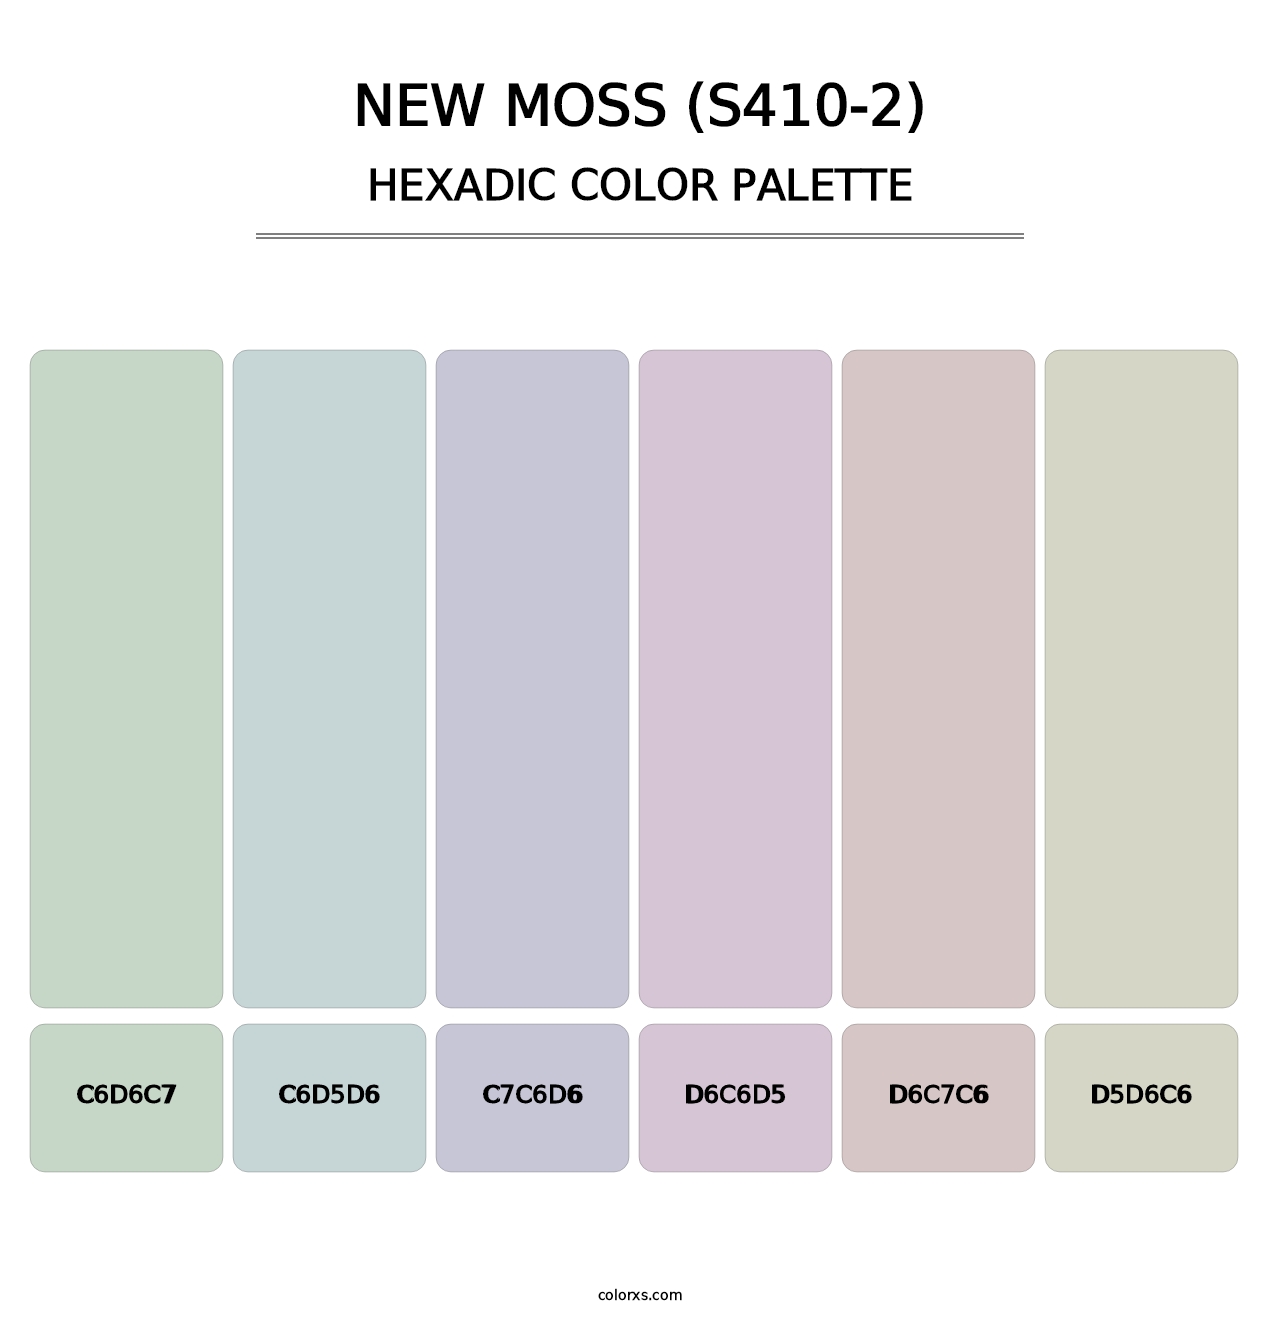 New Moss (S410-2) - Hexadic Color Palette